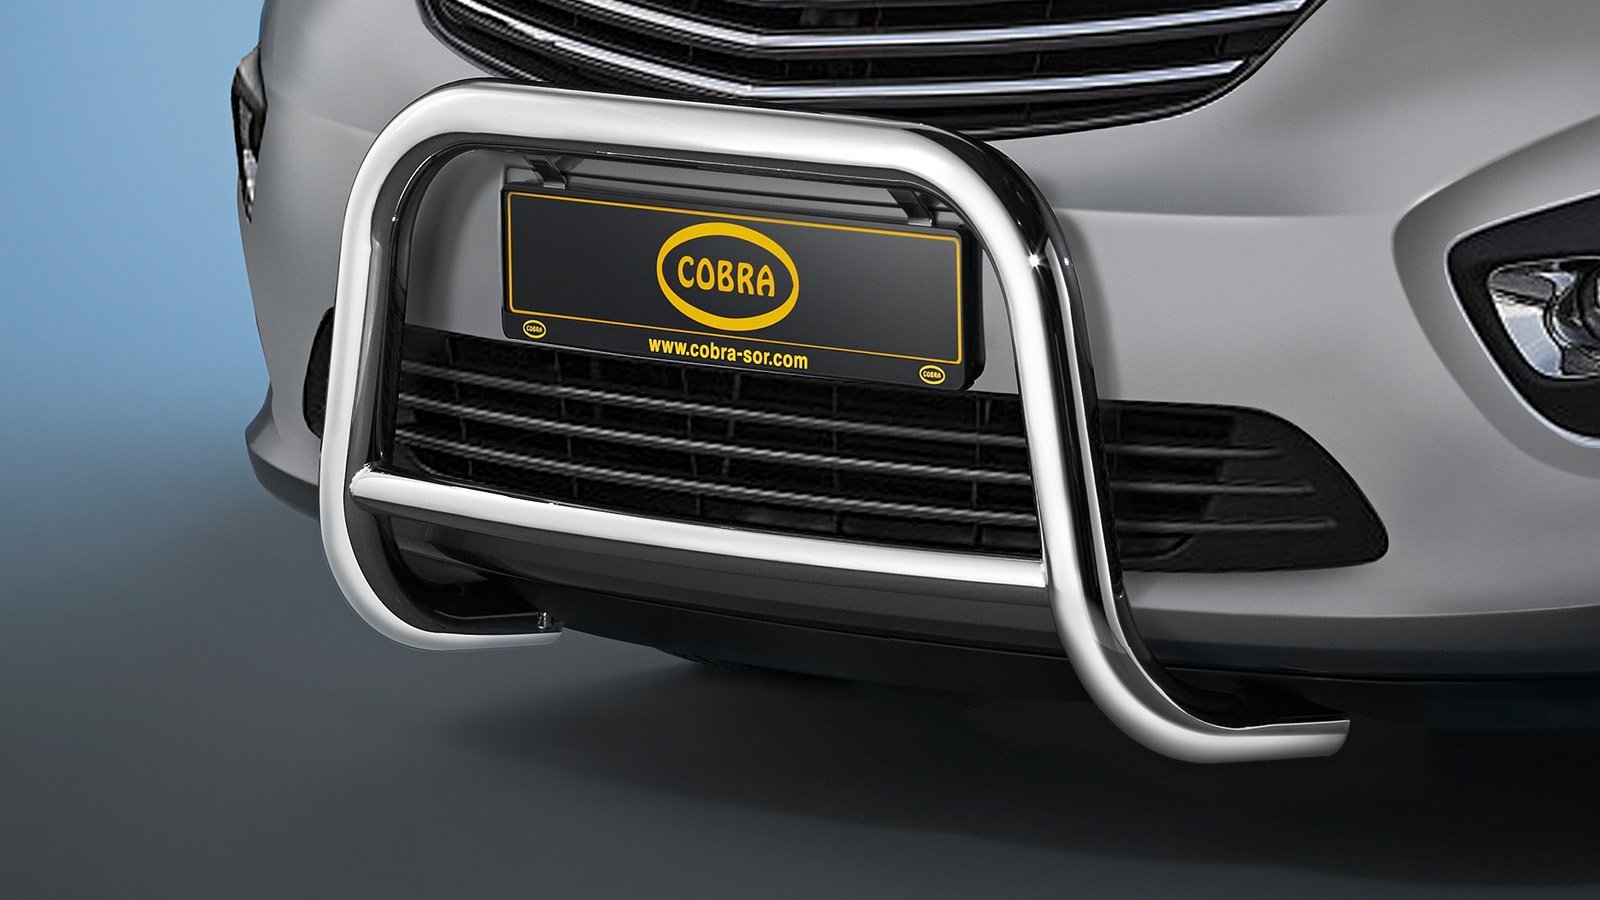 Opel Vivaro Front quard 2014-2019 (Cobra)